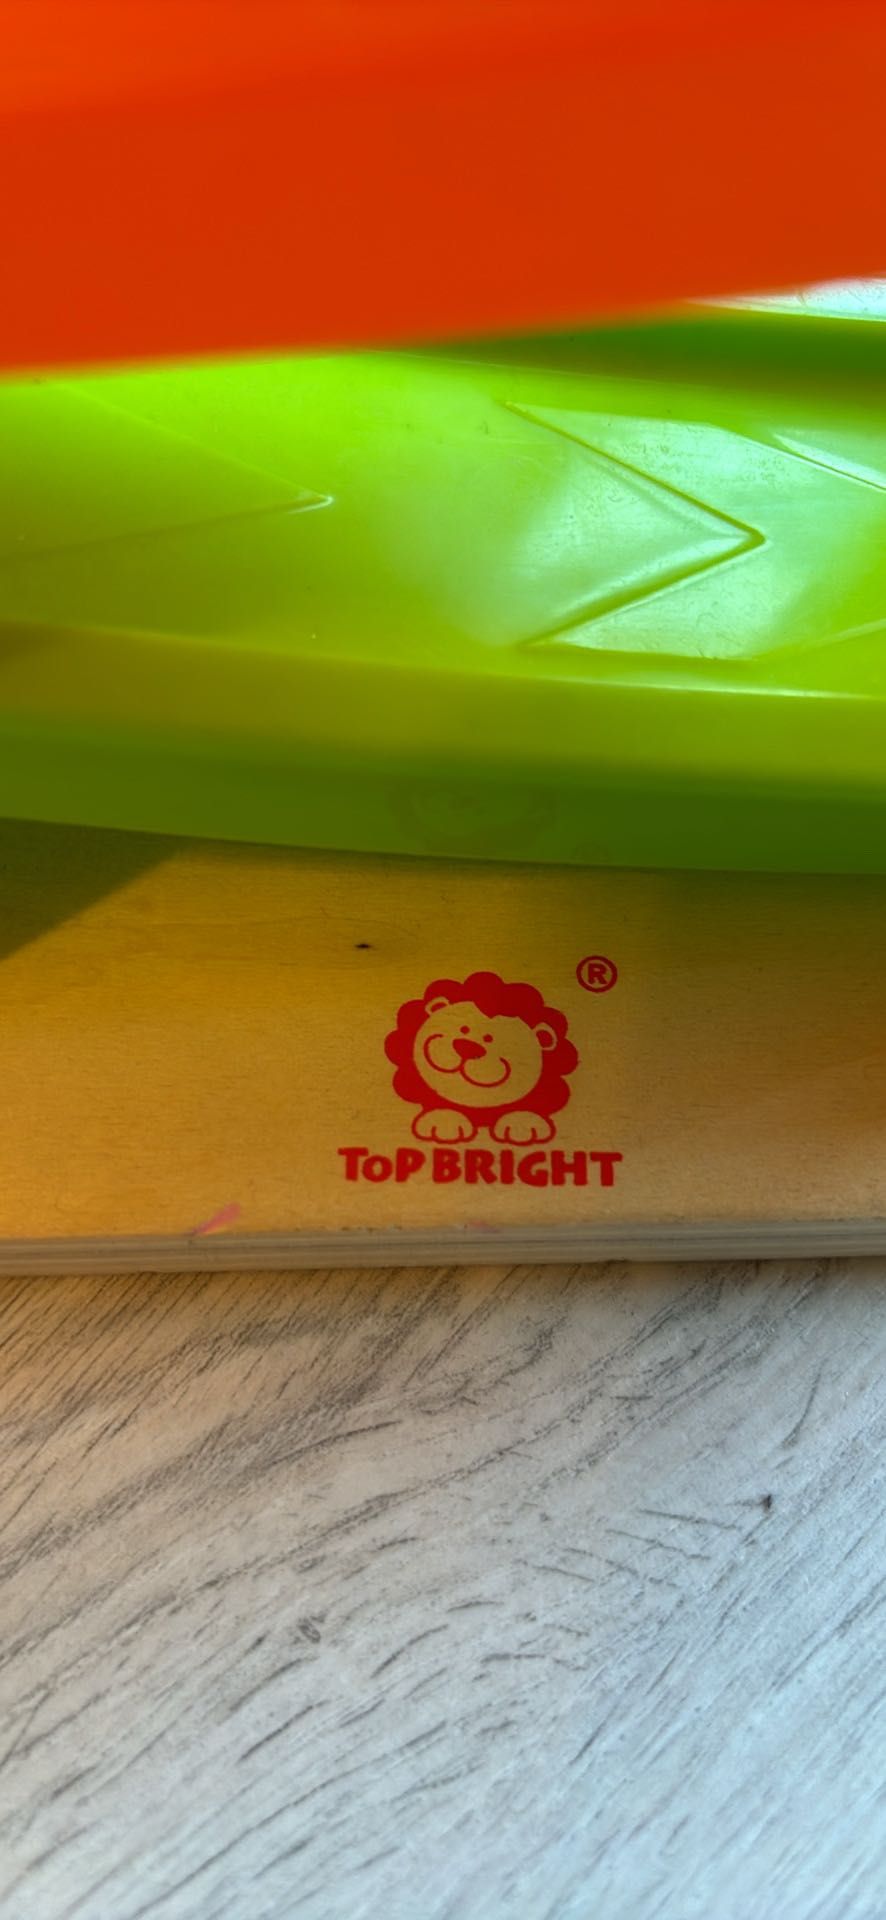 Tor drewniany Top Bright